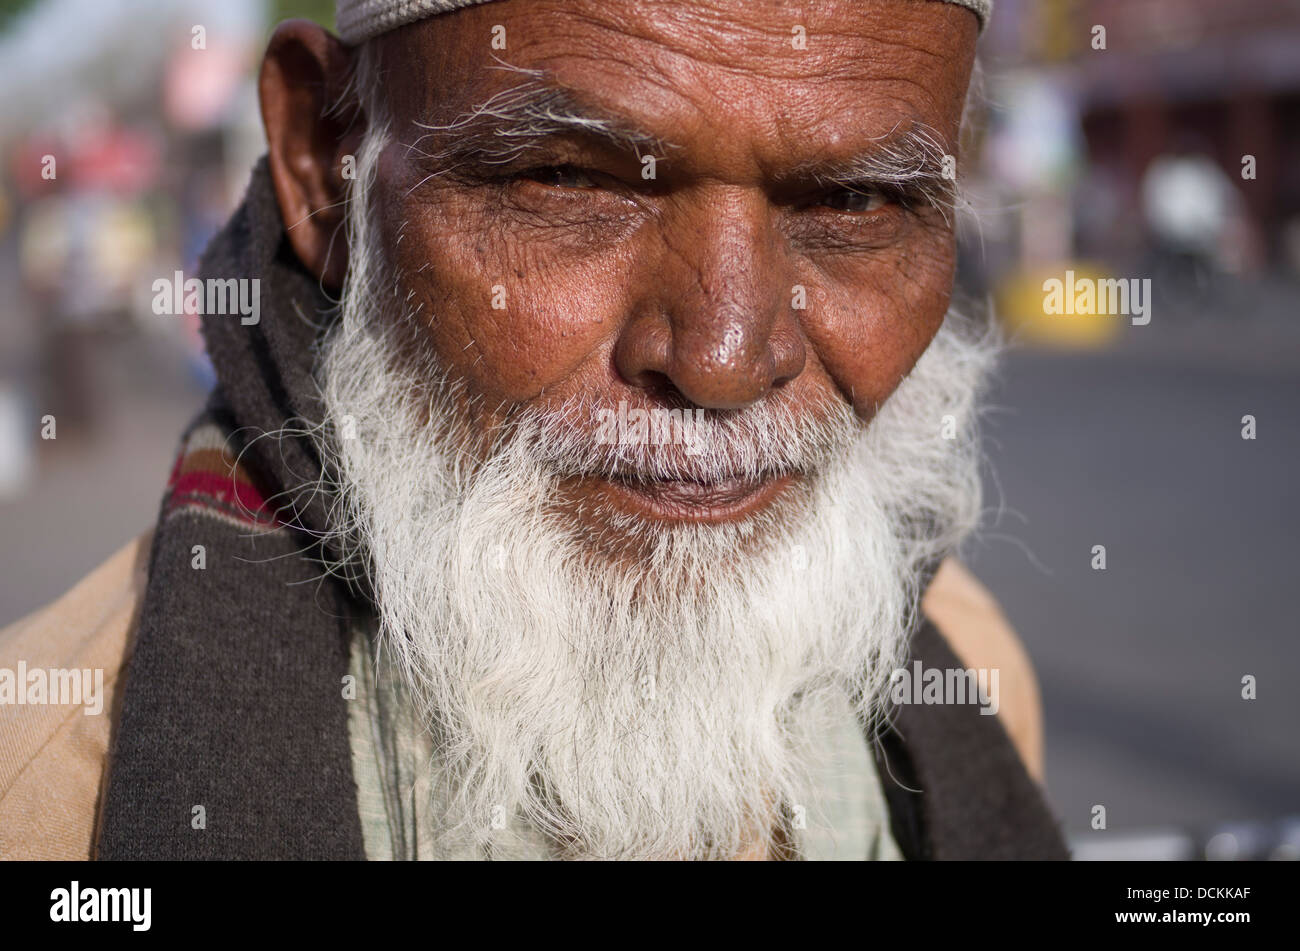 Anziani uomo indiano con barba bianca - Jaipur, Rajasthan, India Foto Stock